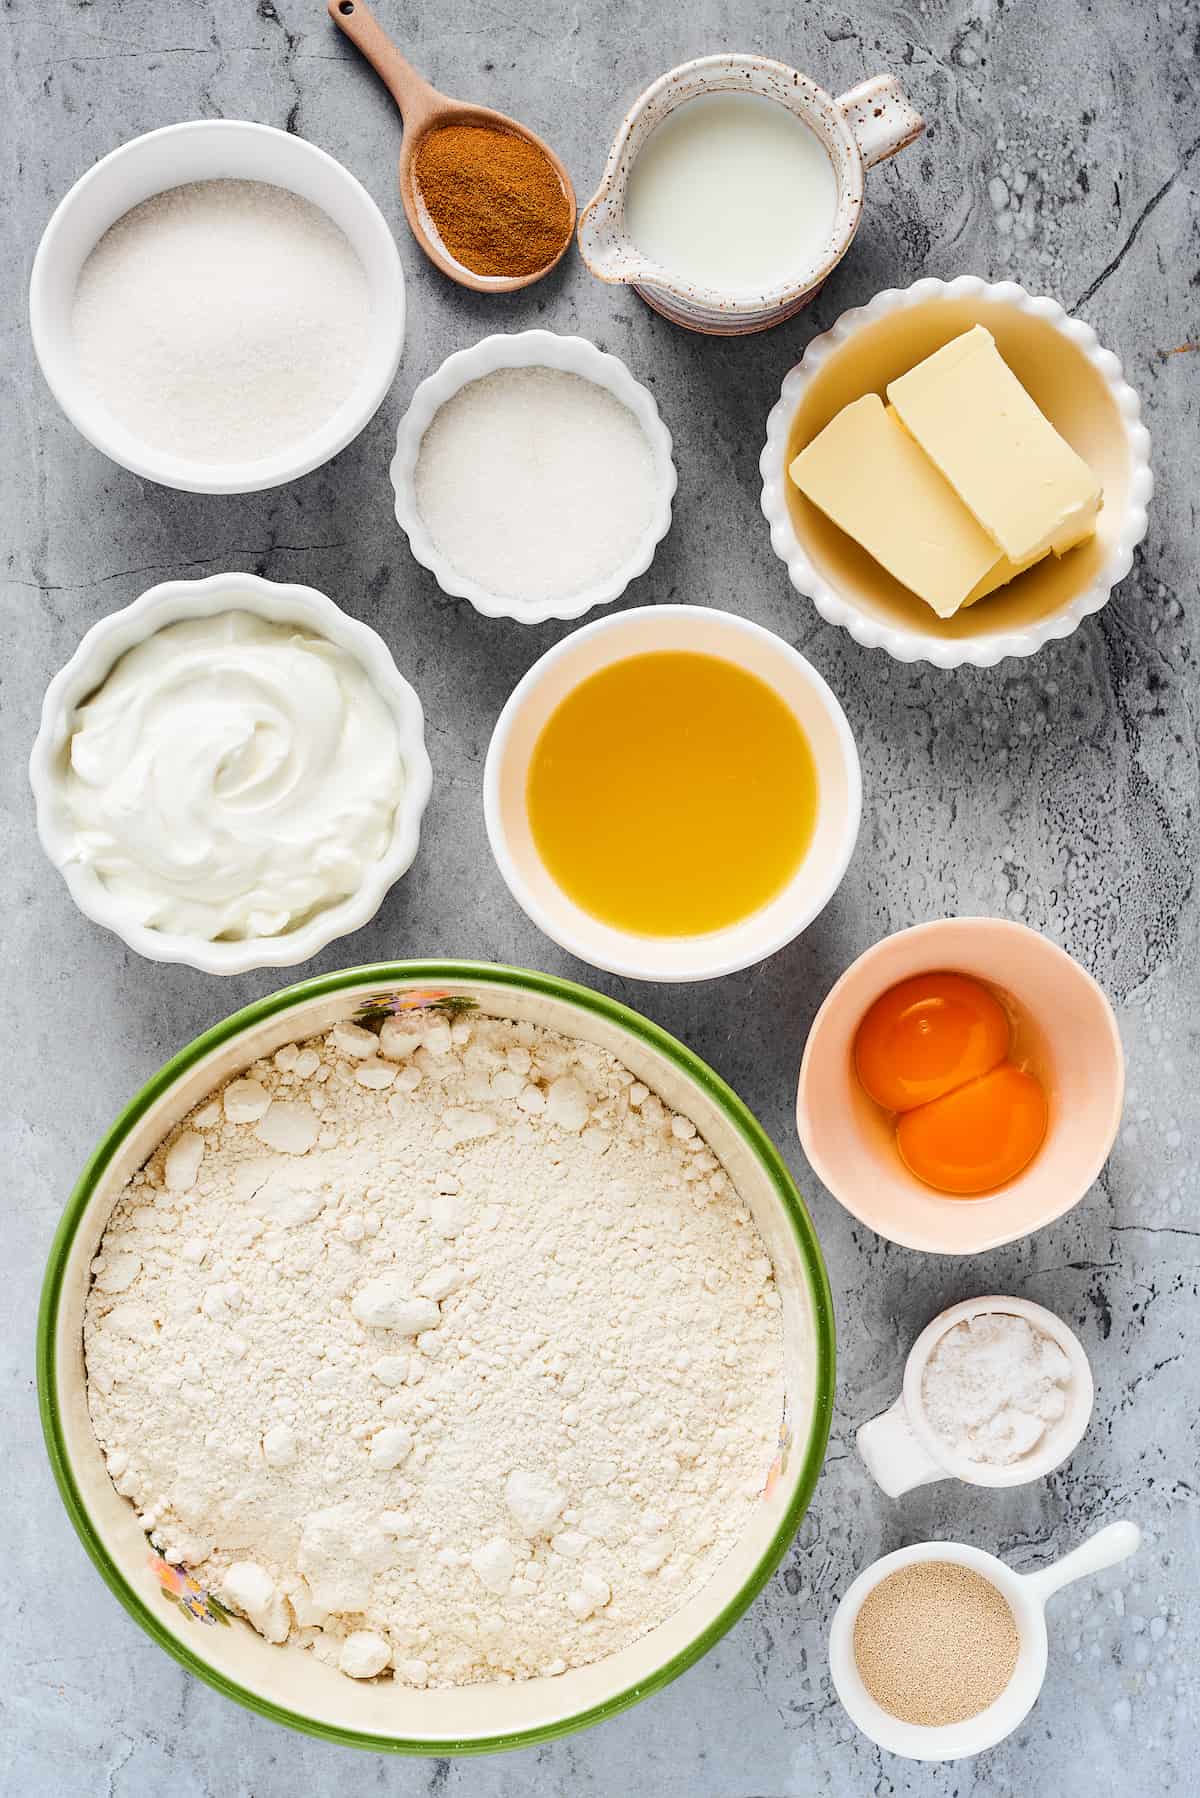 From top left: Sugar, cinnamon, milk, granulated sugar, butter, heavy cream, melted butter, melted butter, egg yolks, spelt flour, salt, instant yeast.